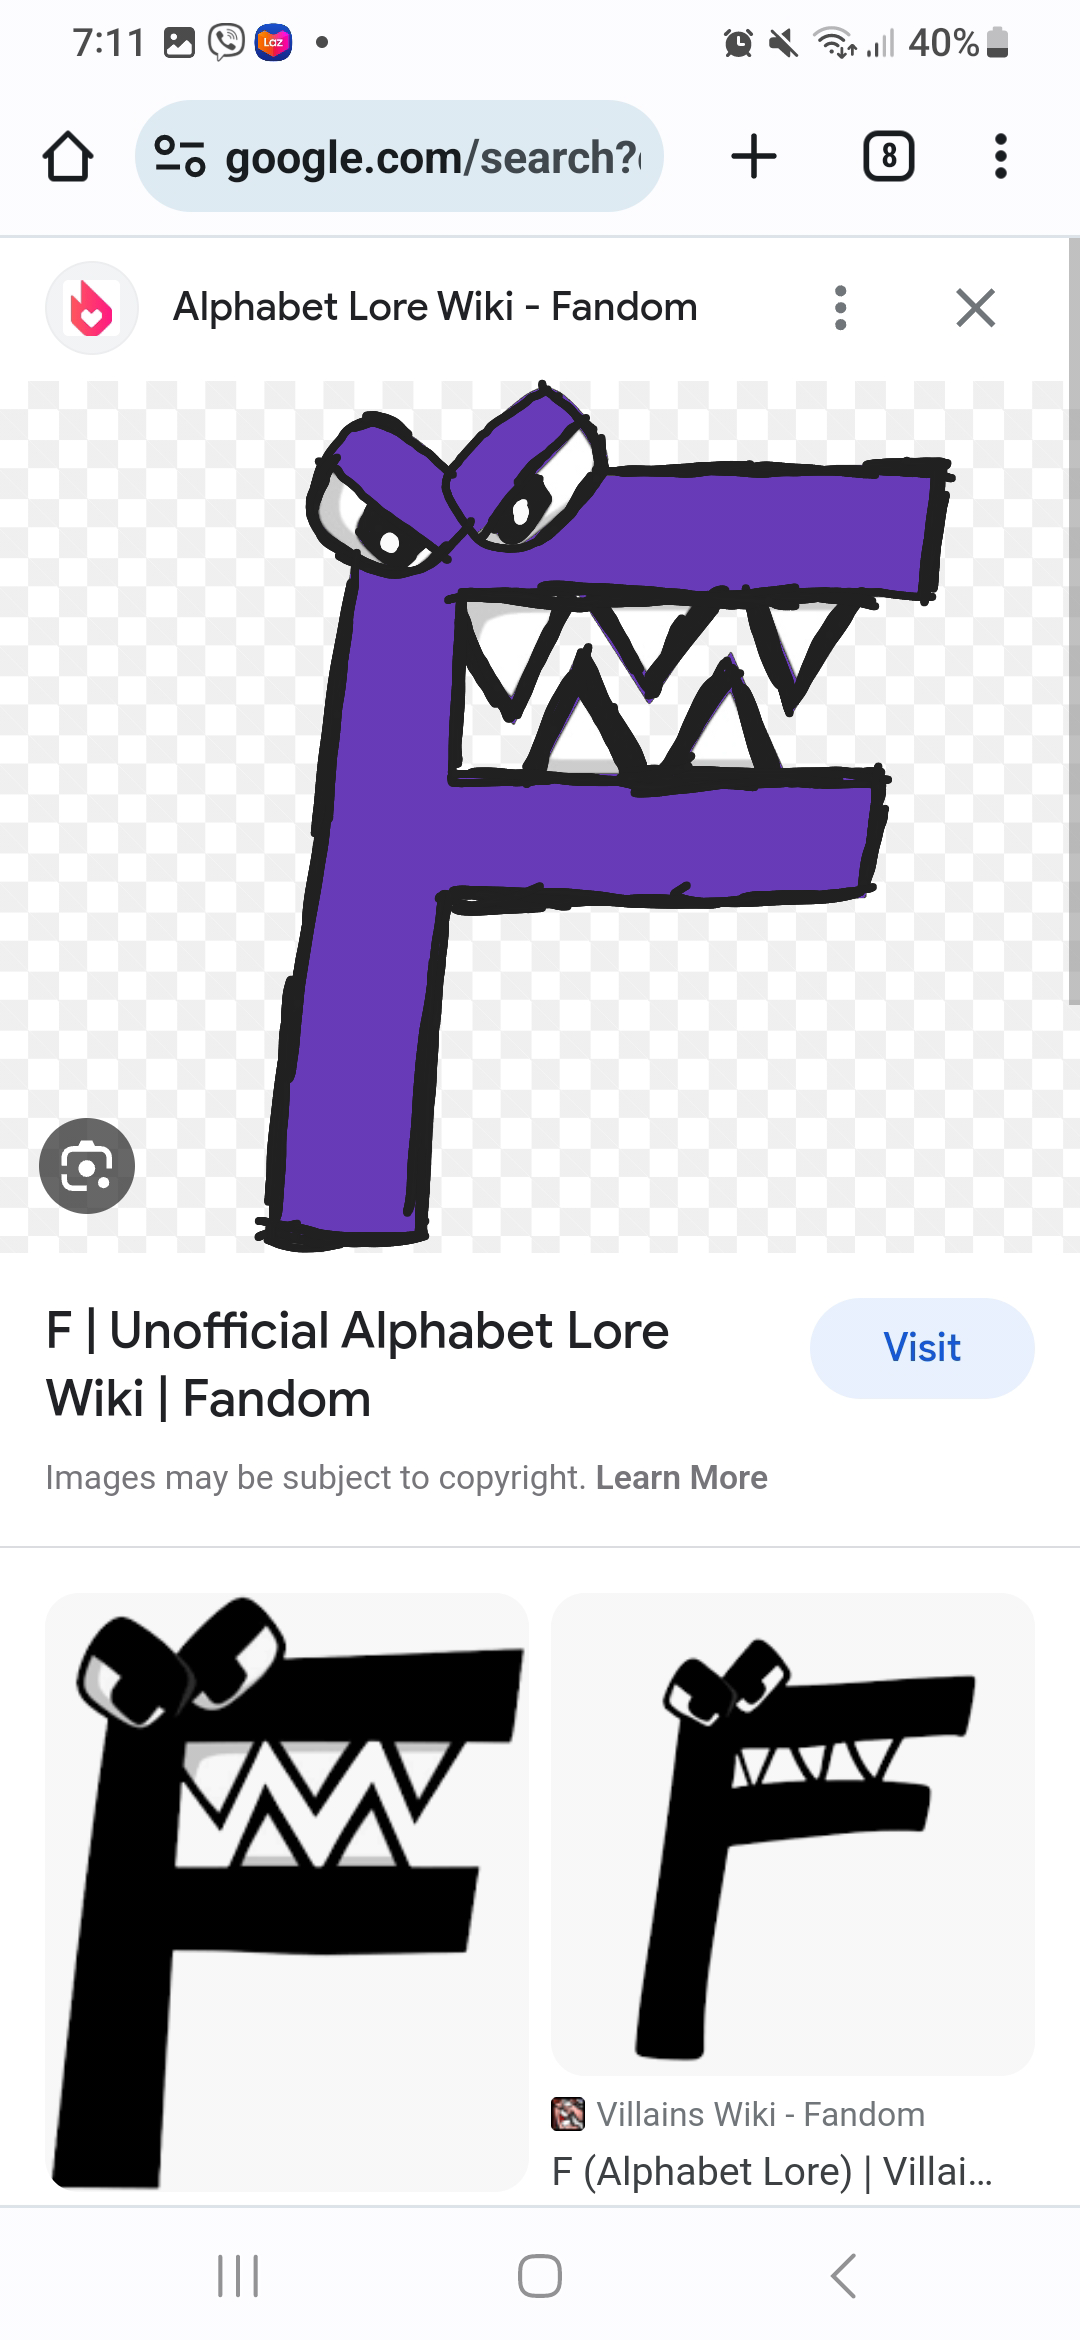 A, Unofficial Alphabet Lore Wiki